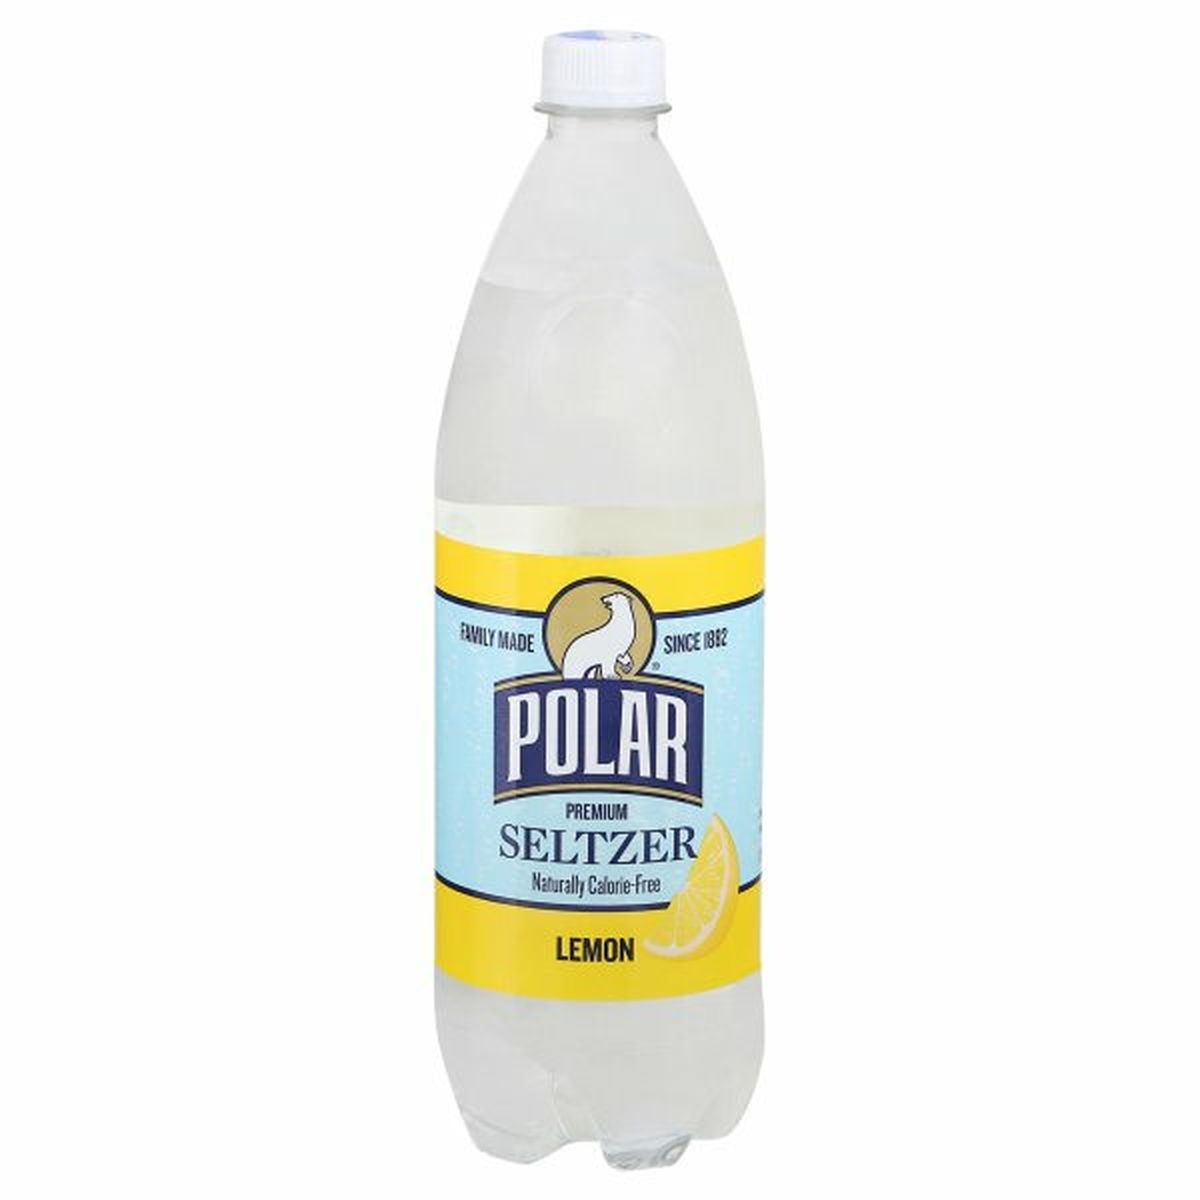 Calories in Polar Seltzer, Premium, Lemon